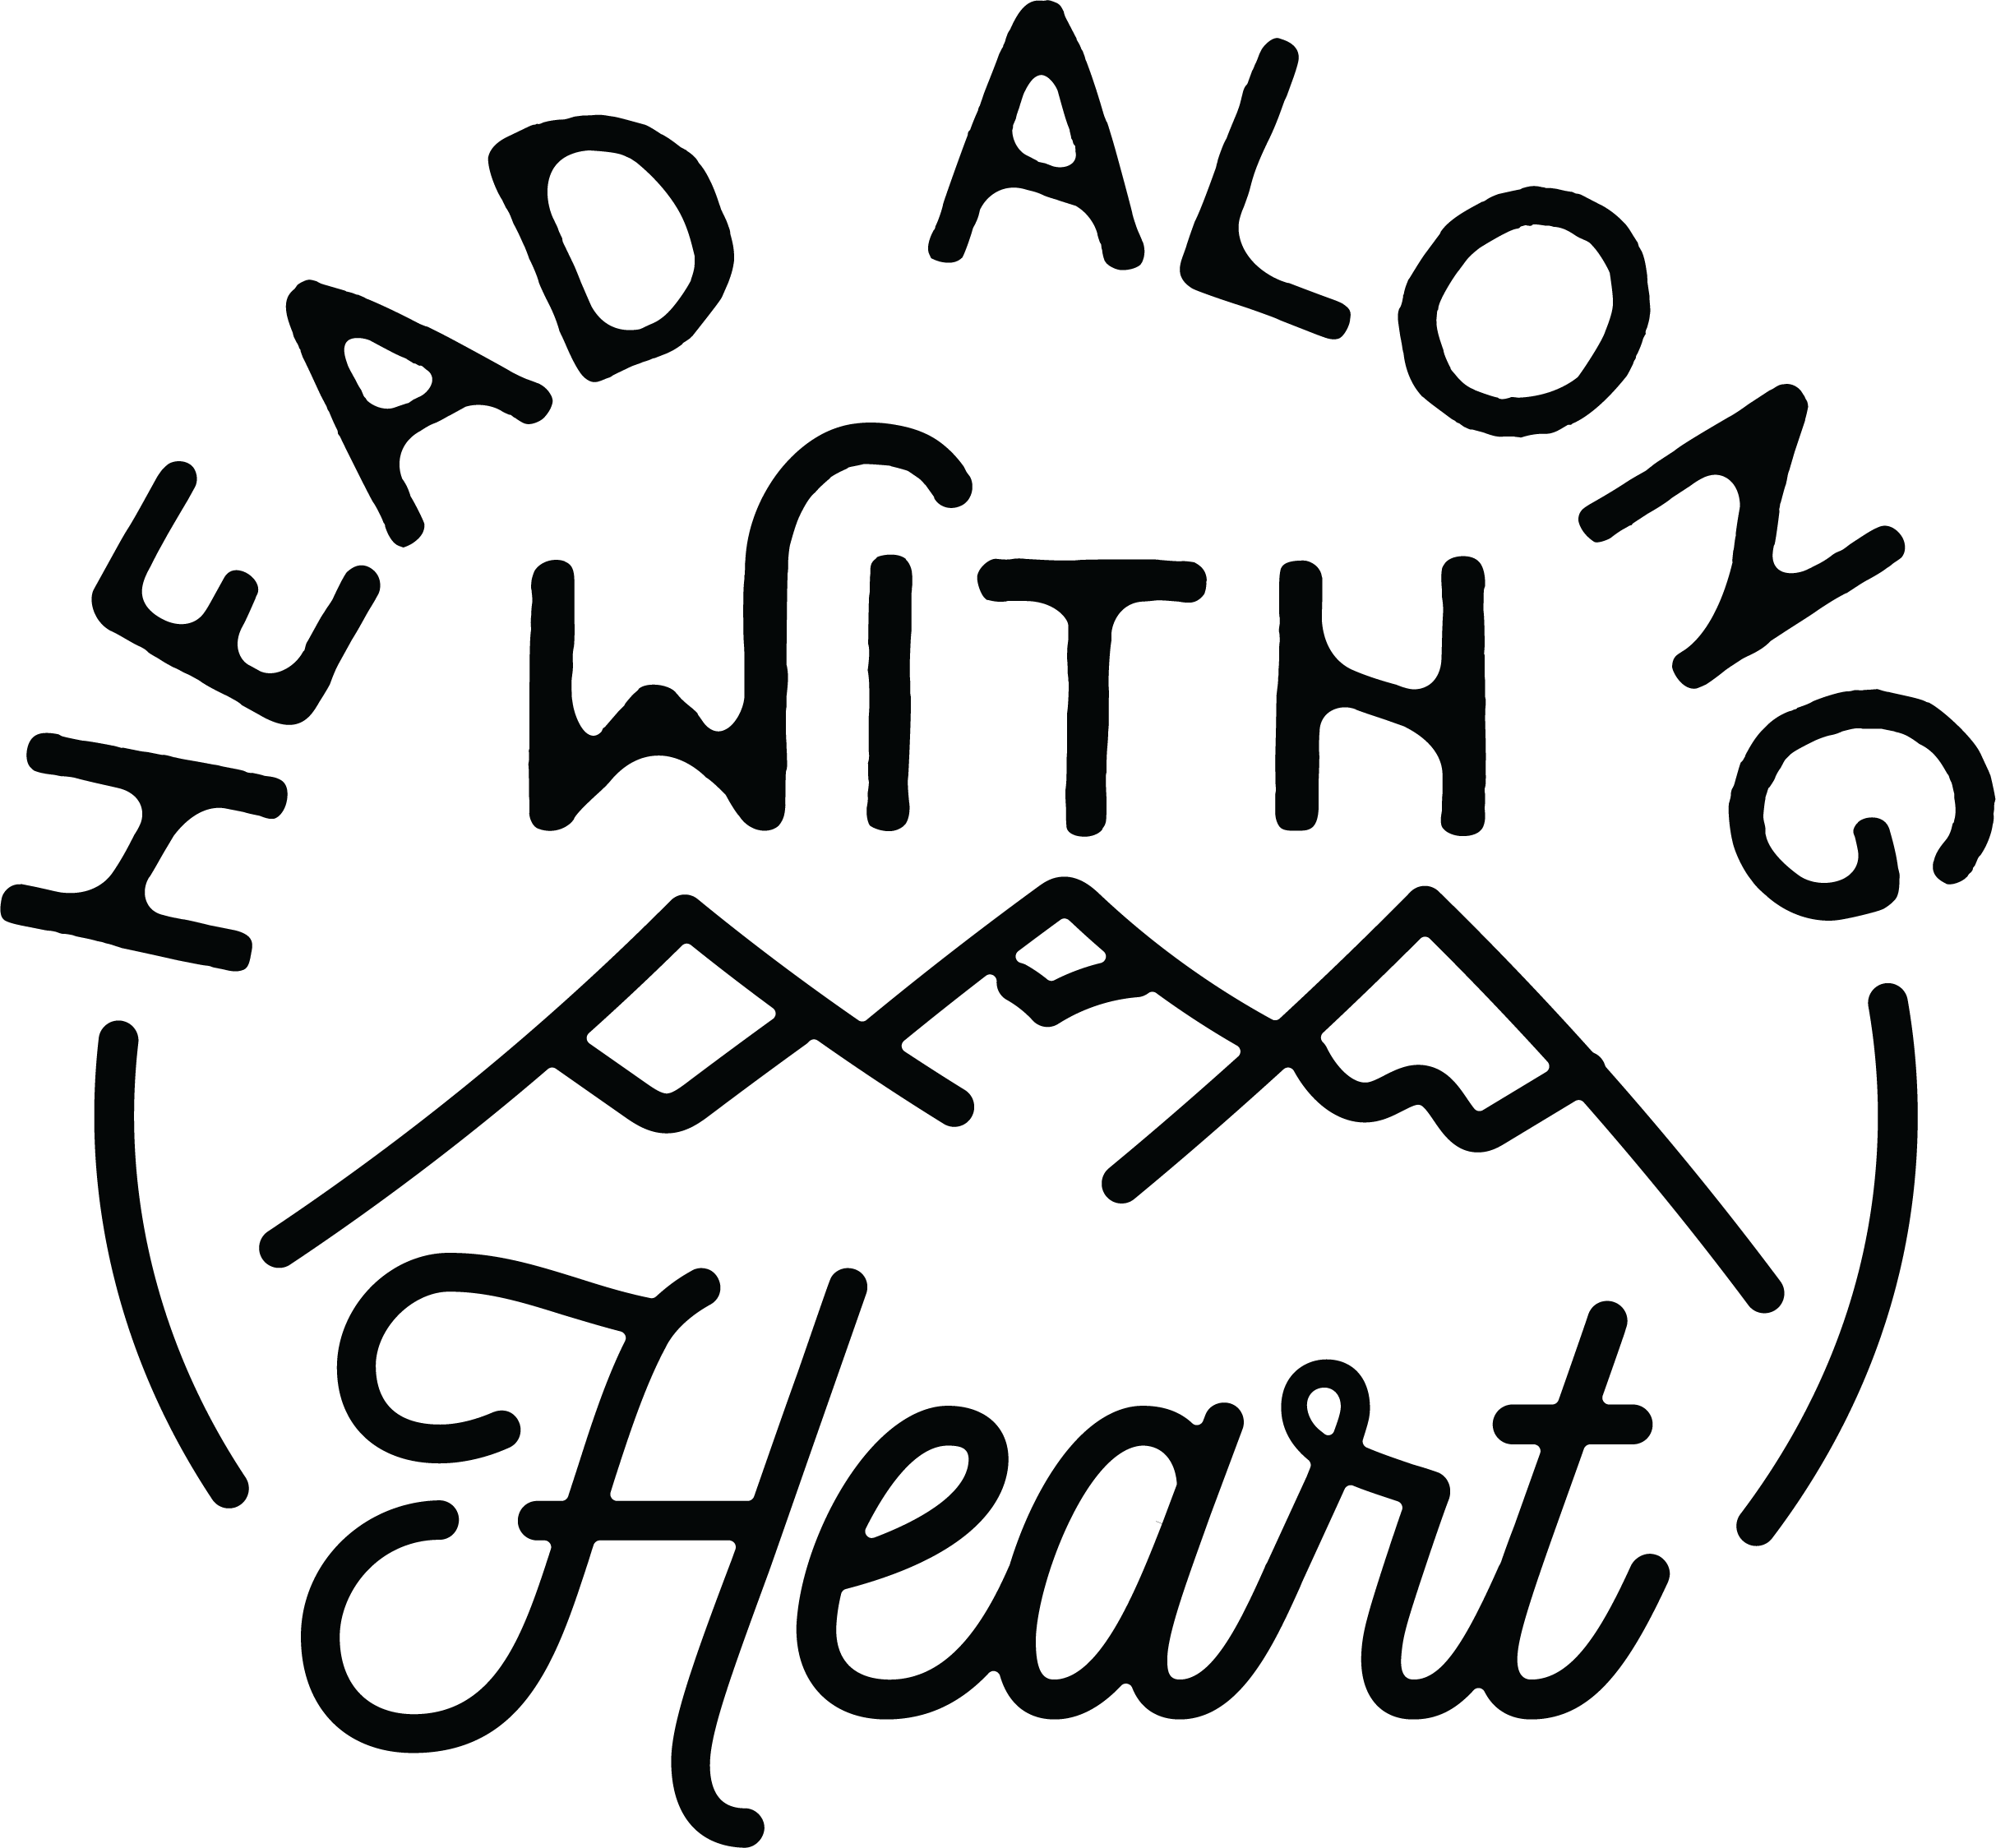 Head Along With Heart